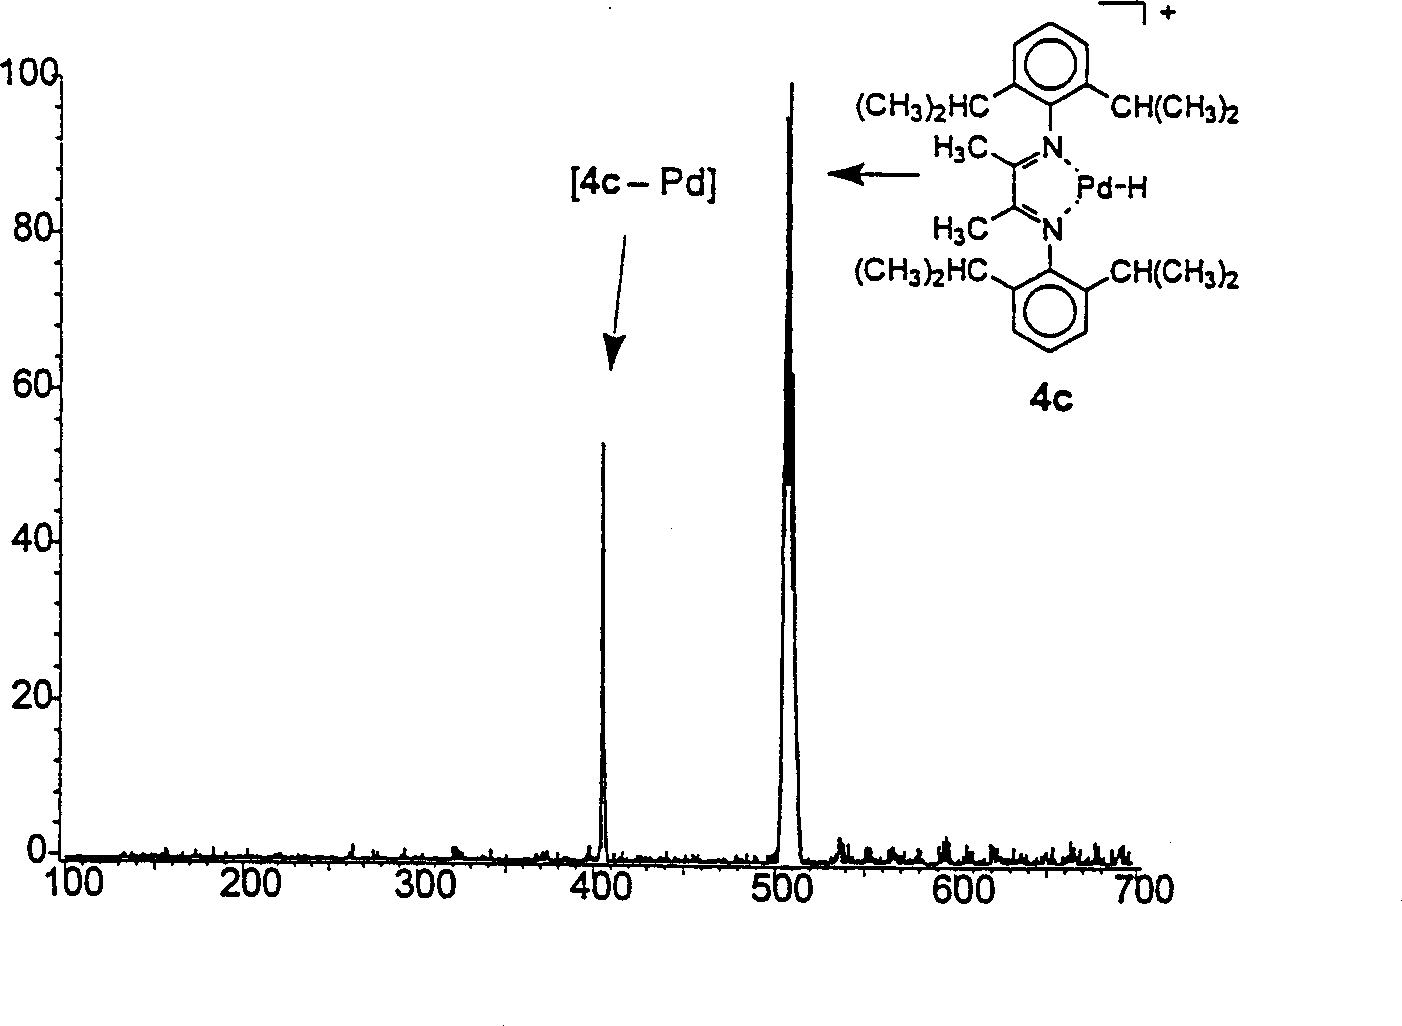 Mass spectrometric screening of catalysts